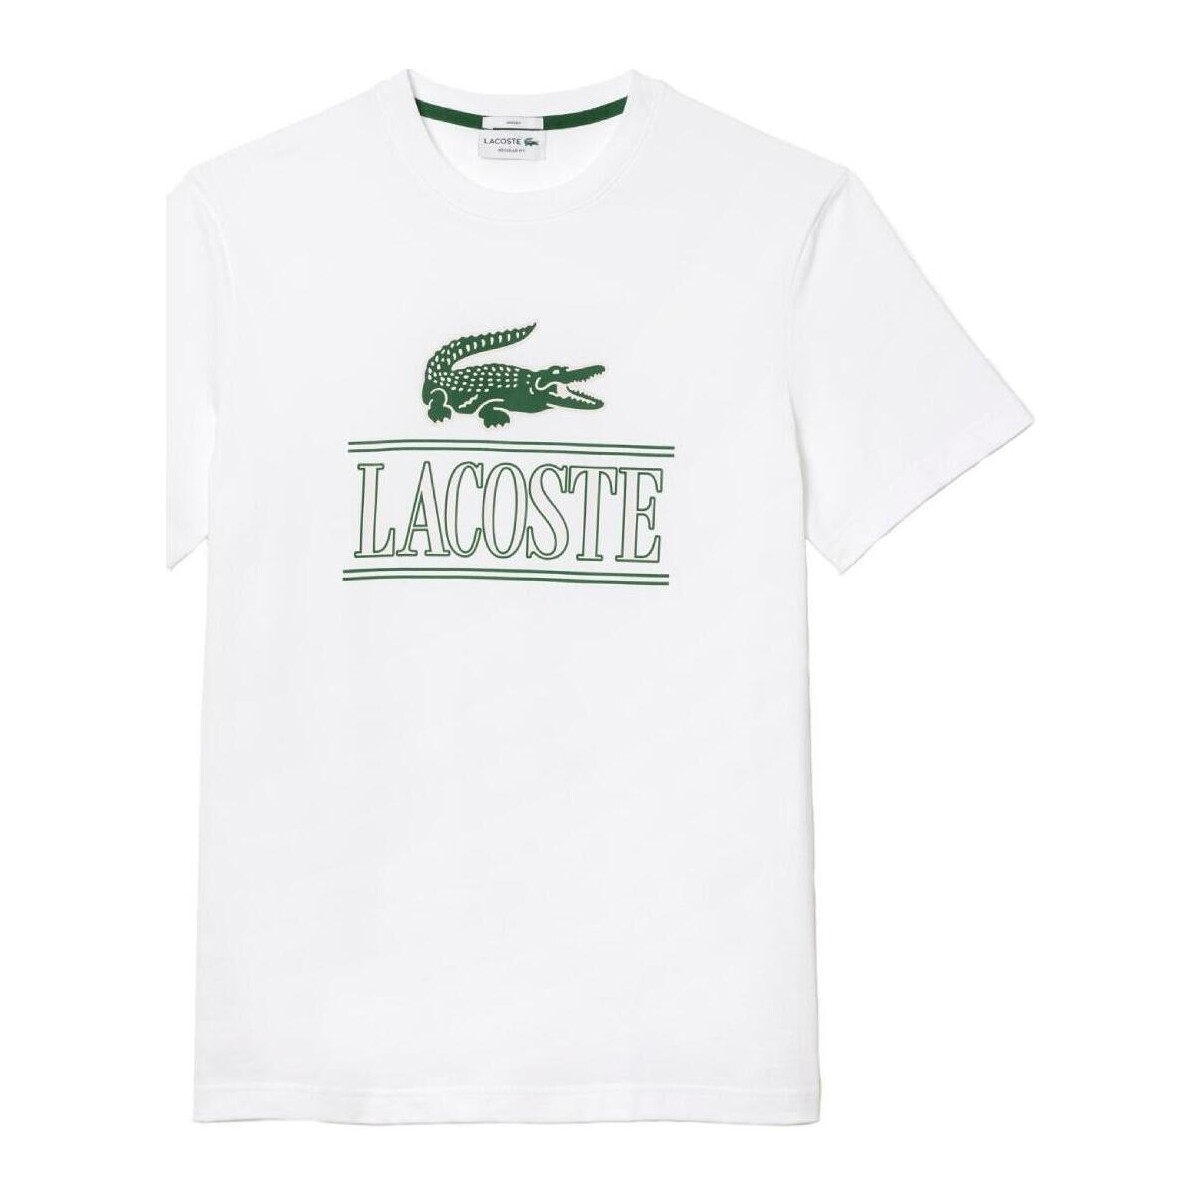 textil Herr T-shirts Lacoste  Vit